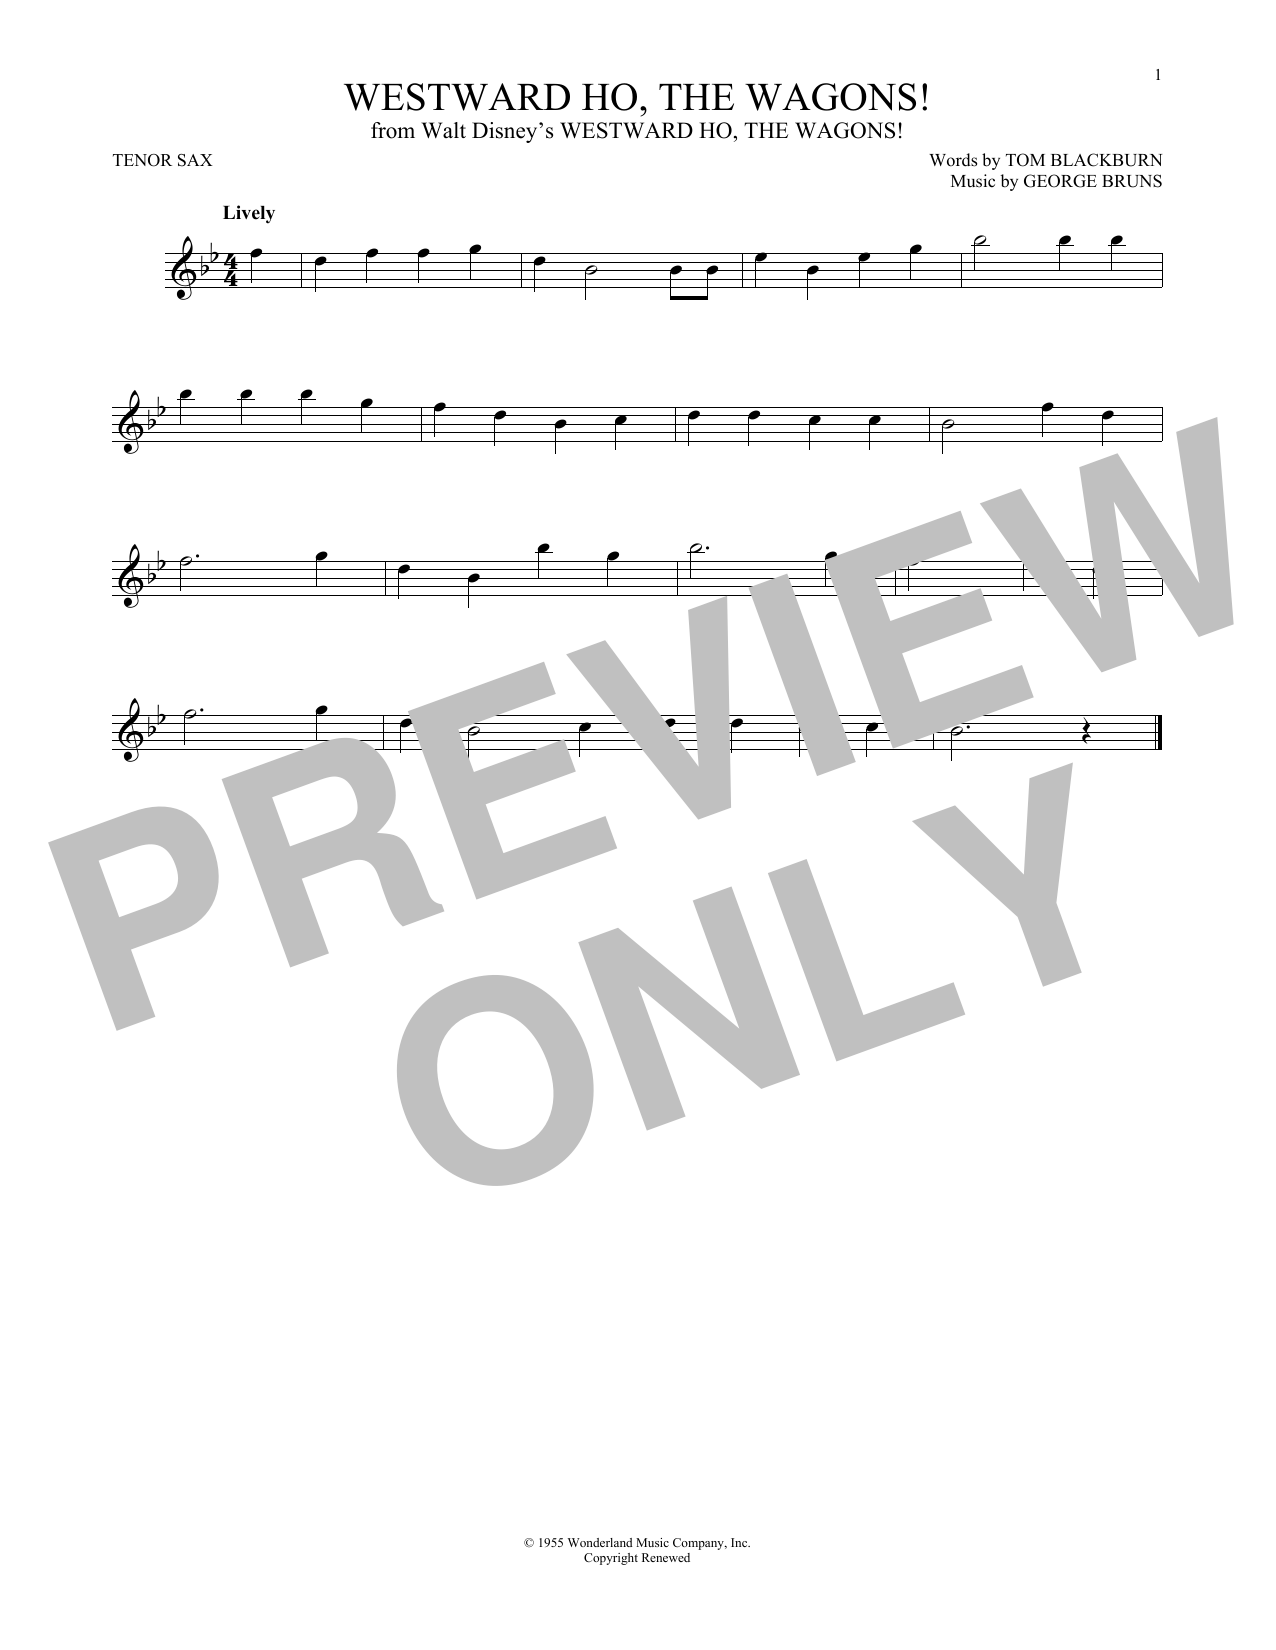 Tom Blackburn Westward Ho, The Wagons! Sheet Music Notes & Chords for Melody Line, Lyrics & Chords - Download or Print PDF